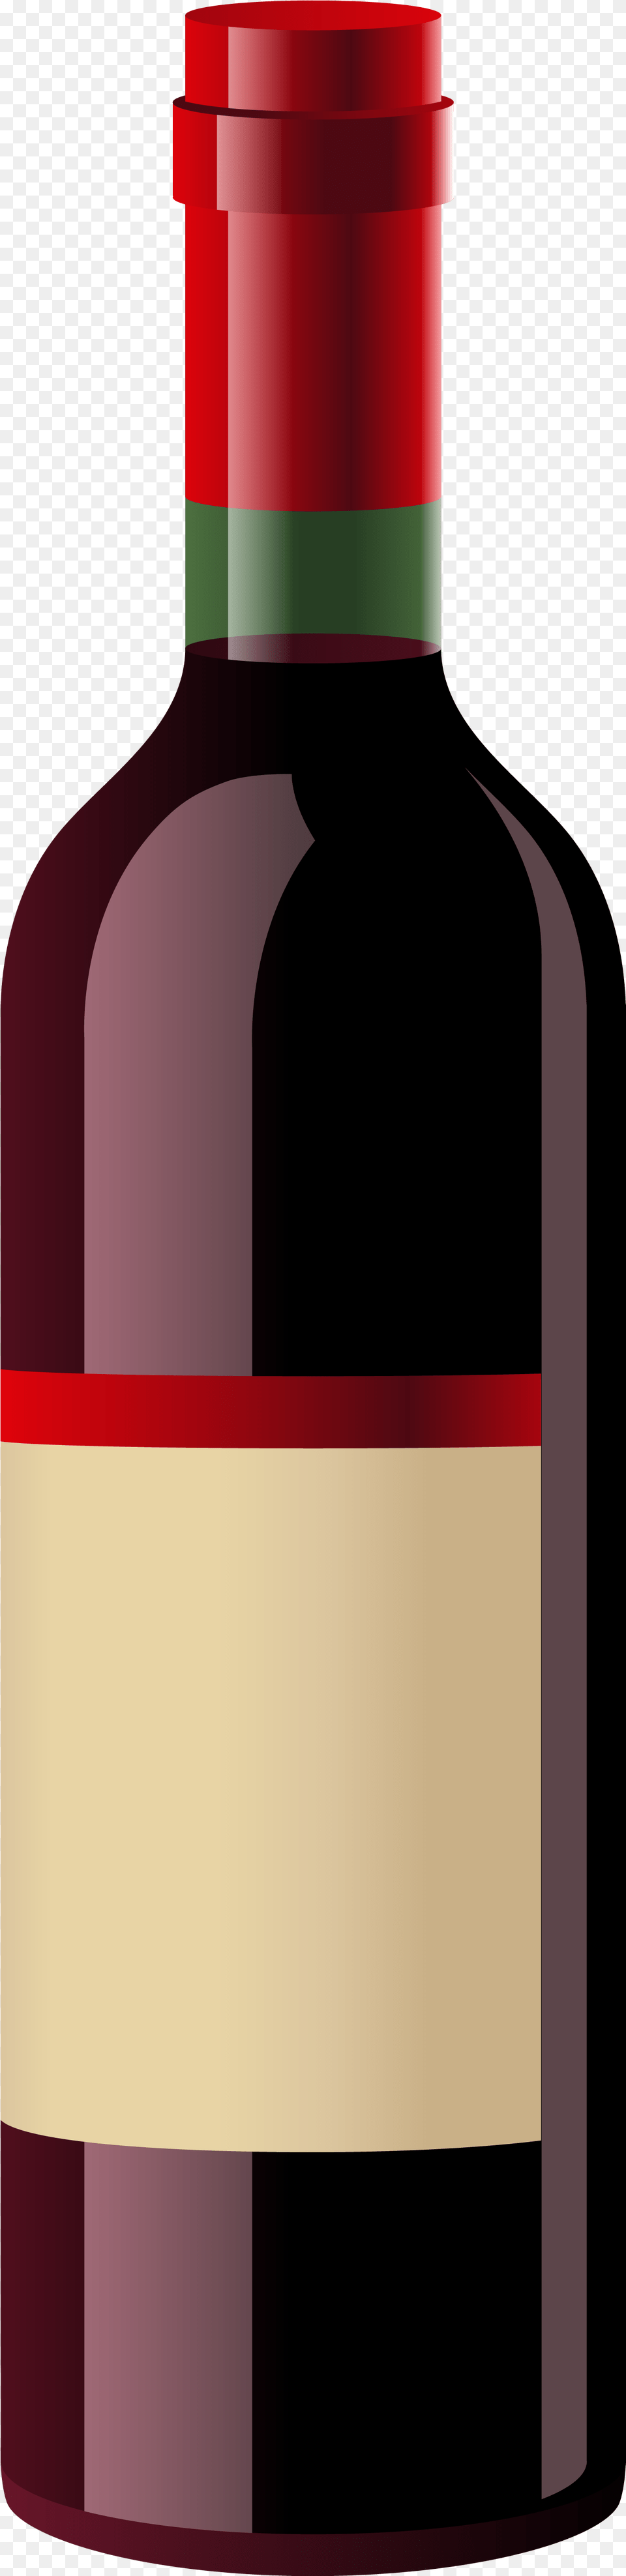 Red Wine Bottle Clipart Wine Bottle, Alcohol, Beverage, Liquor, Wine Bottle Free Png